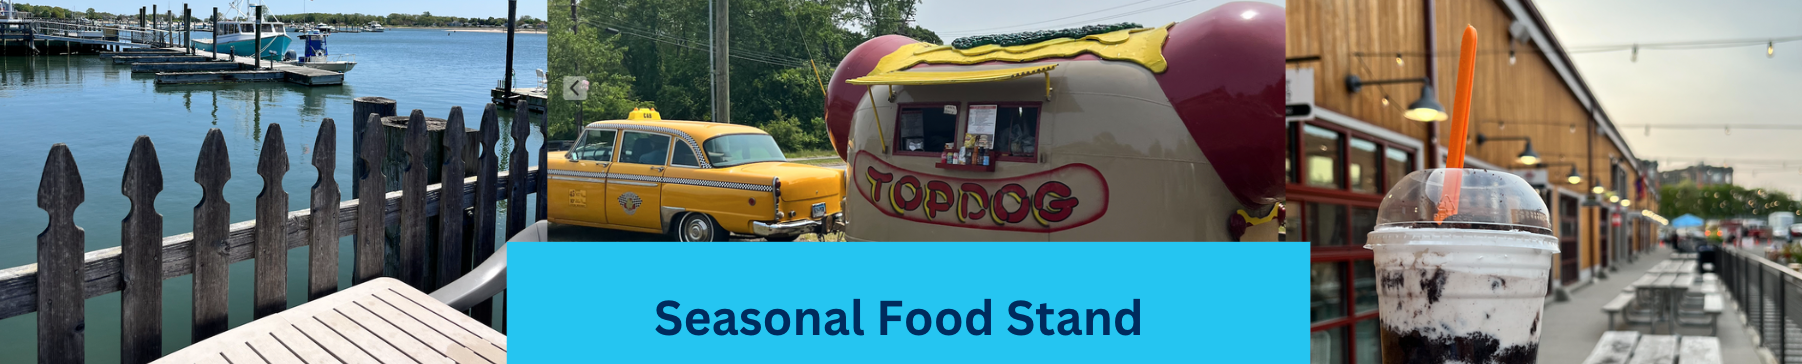 Seasonal Food Stand